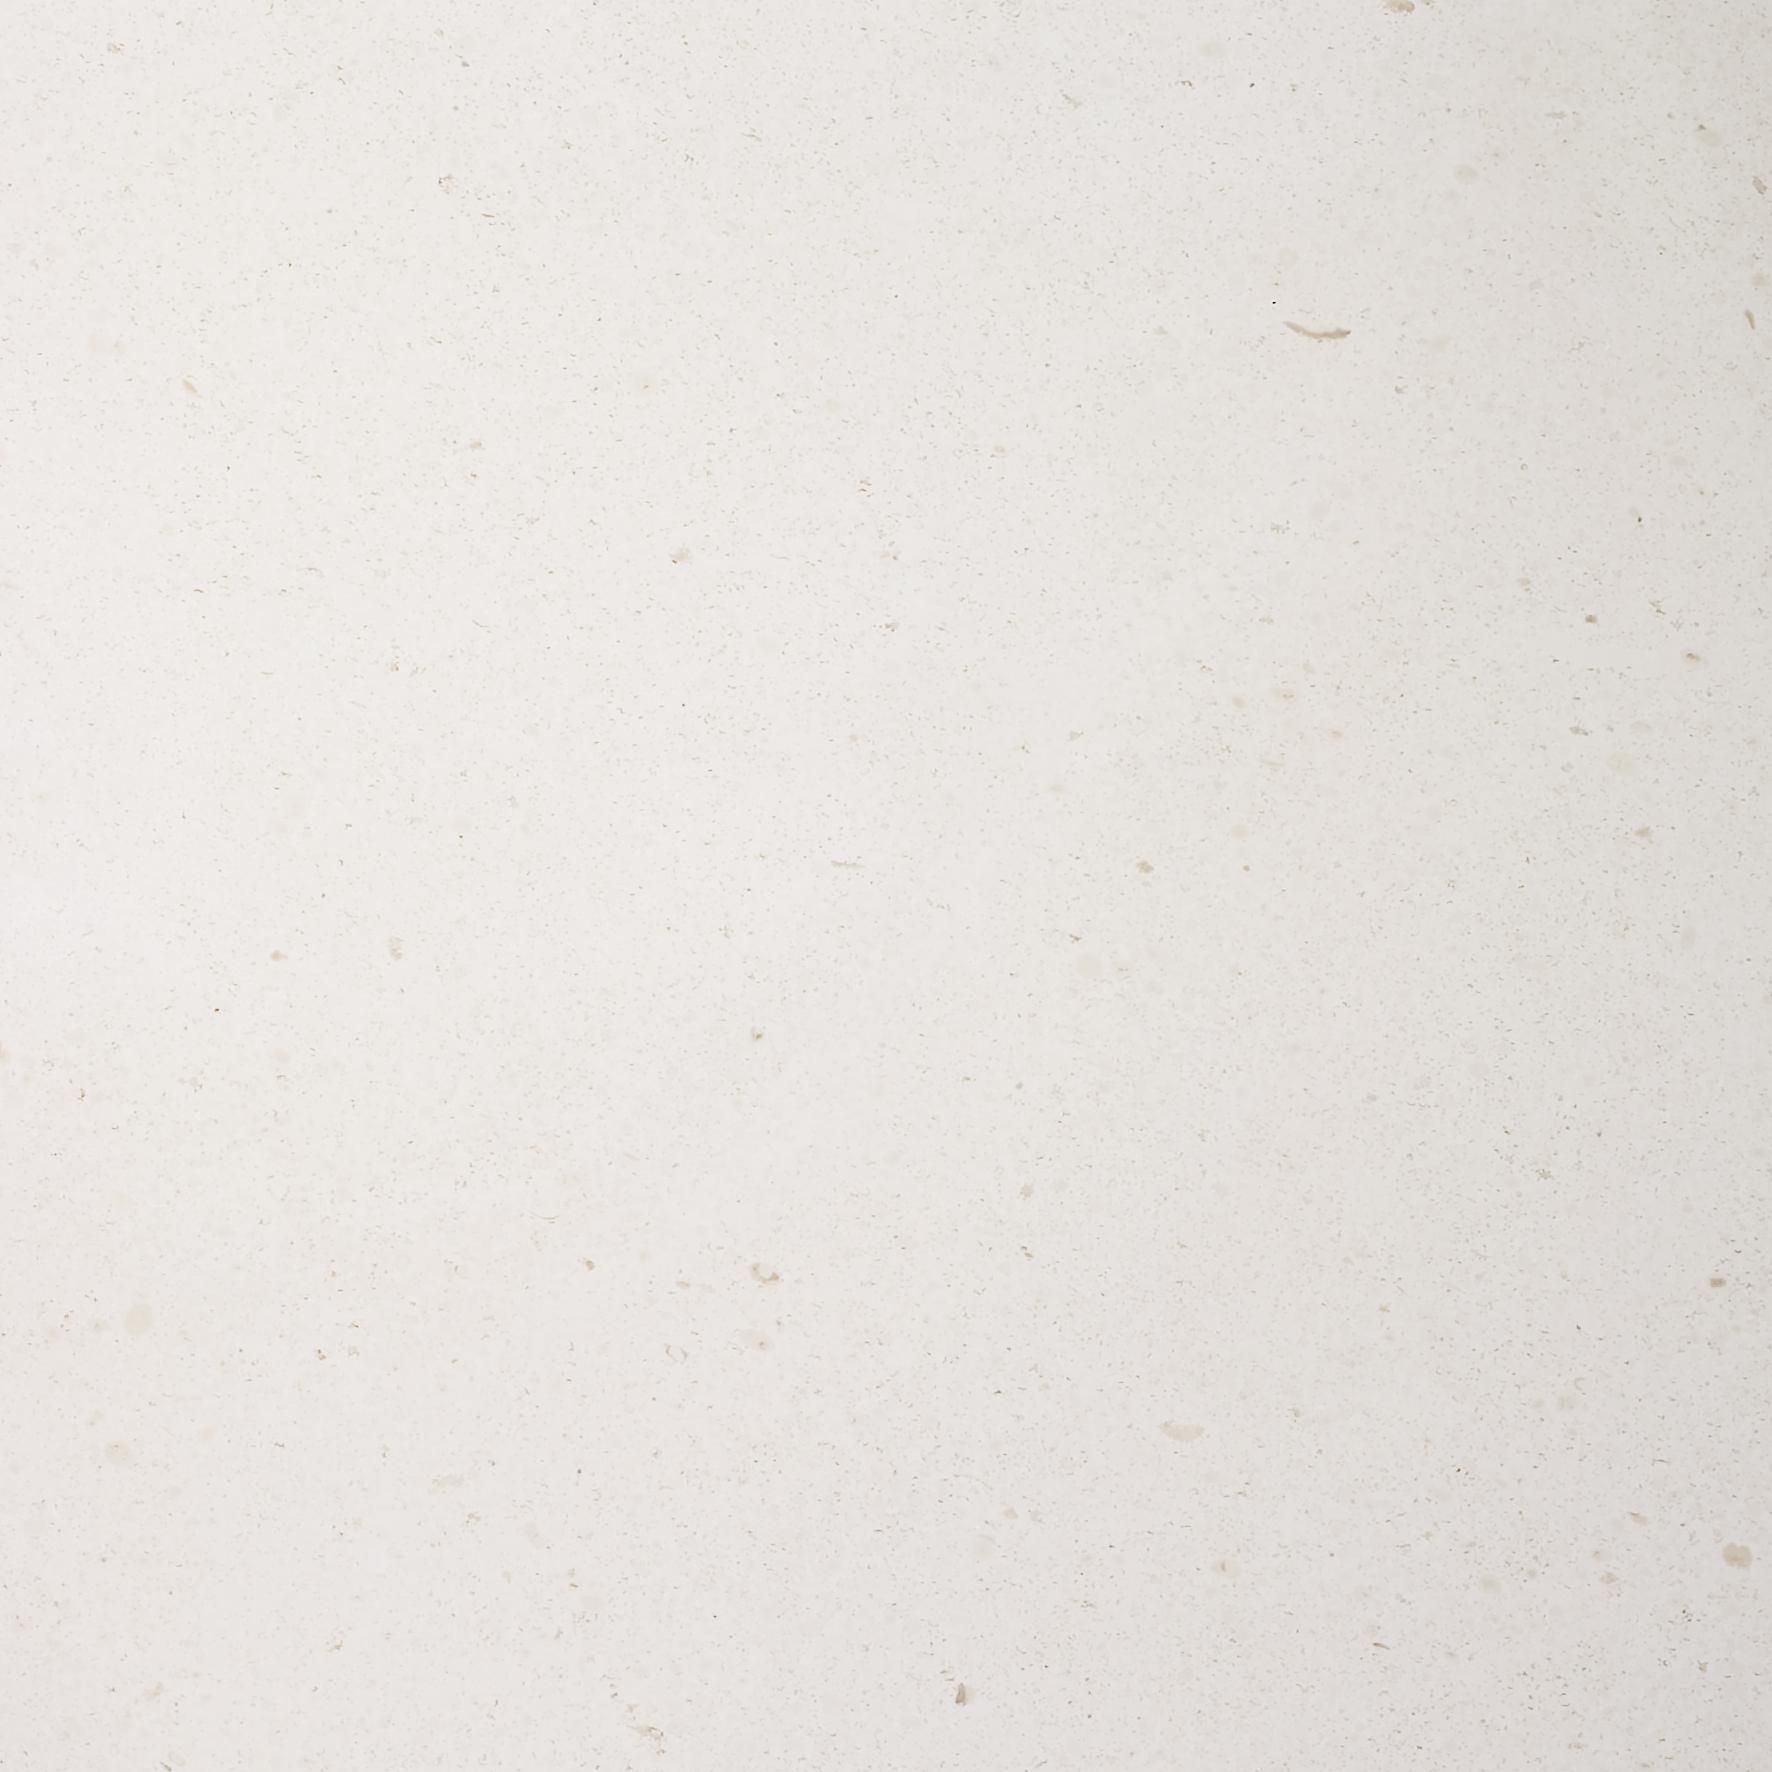 capri marbre beige clair extreme